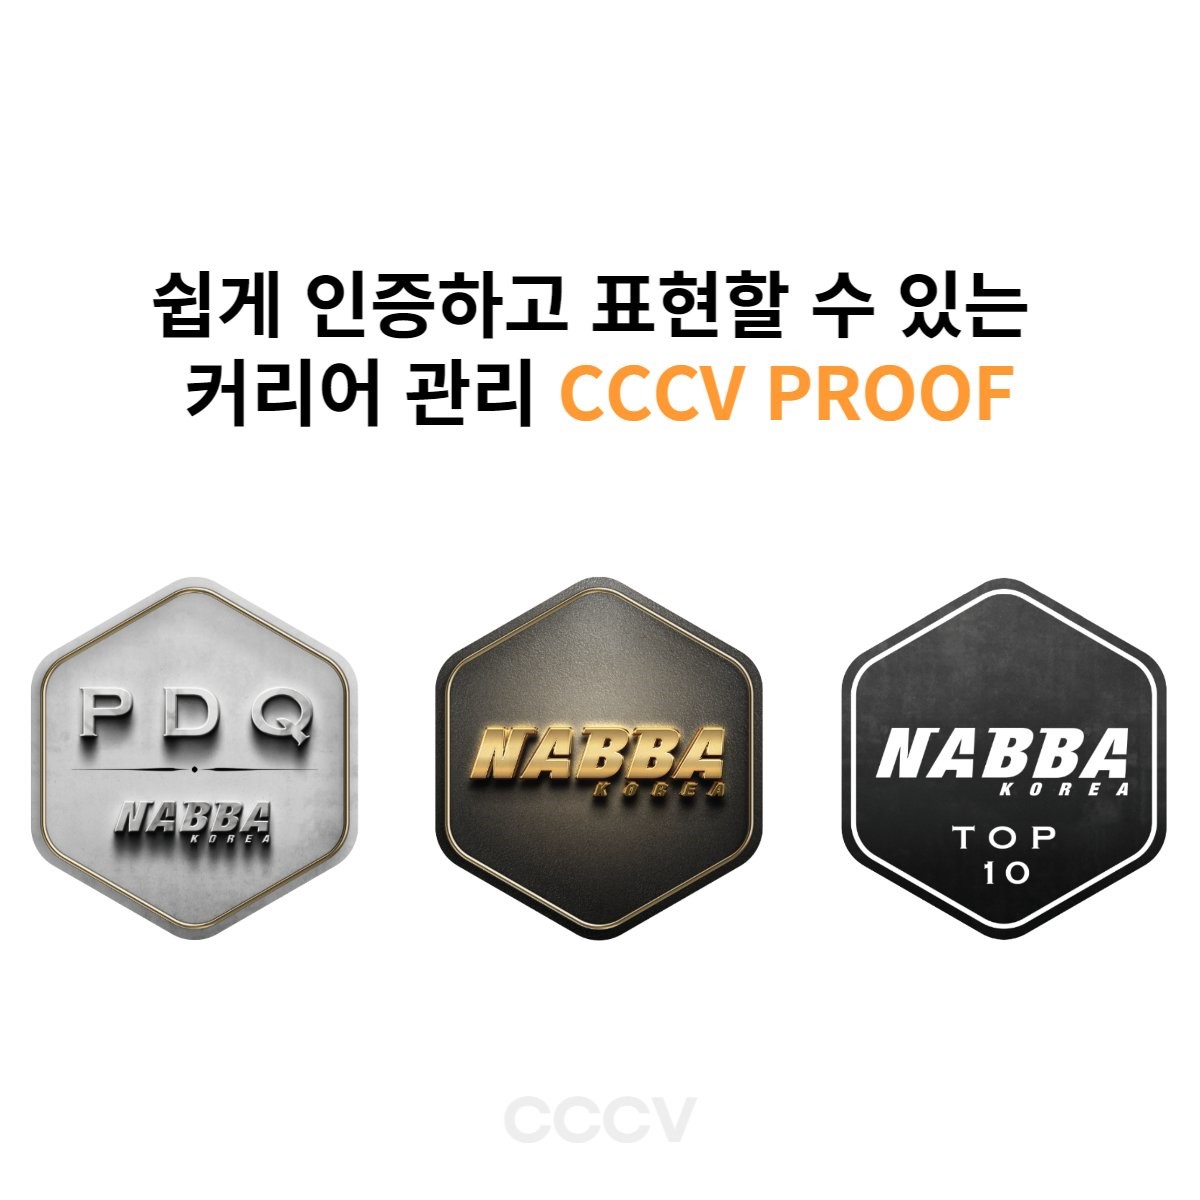 BlockoXYG подписал меморандум о взаимопонимании с Nava Korea